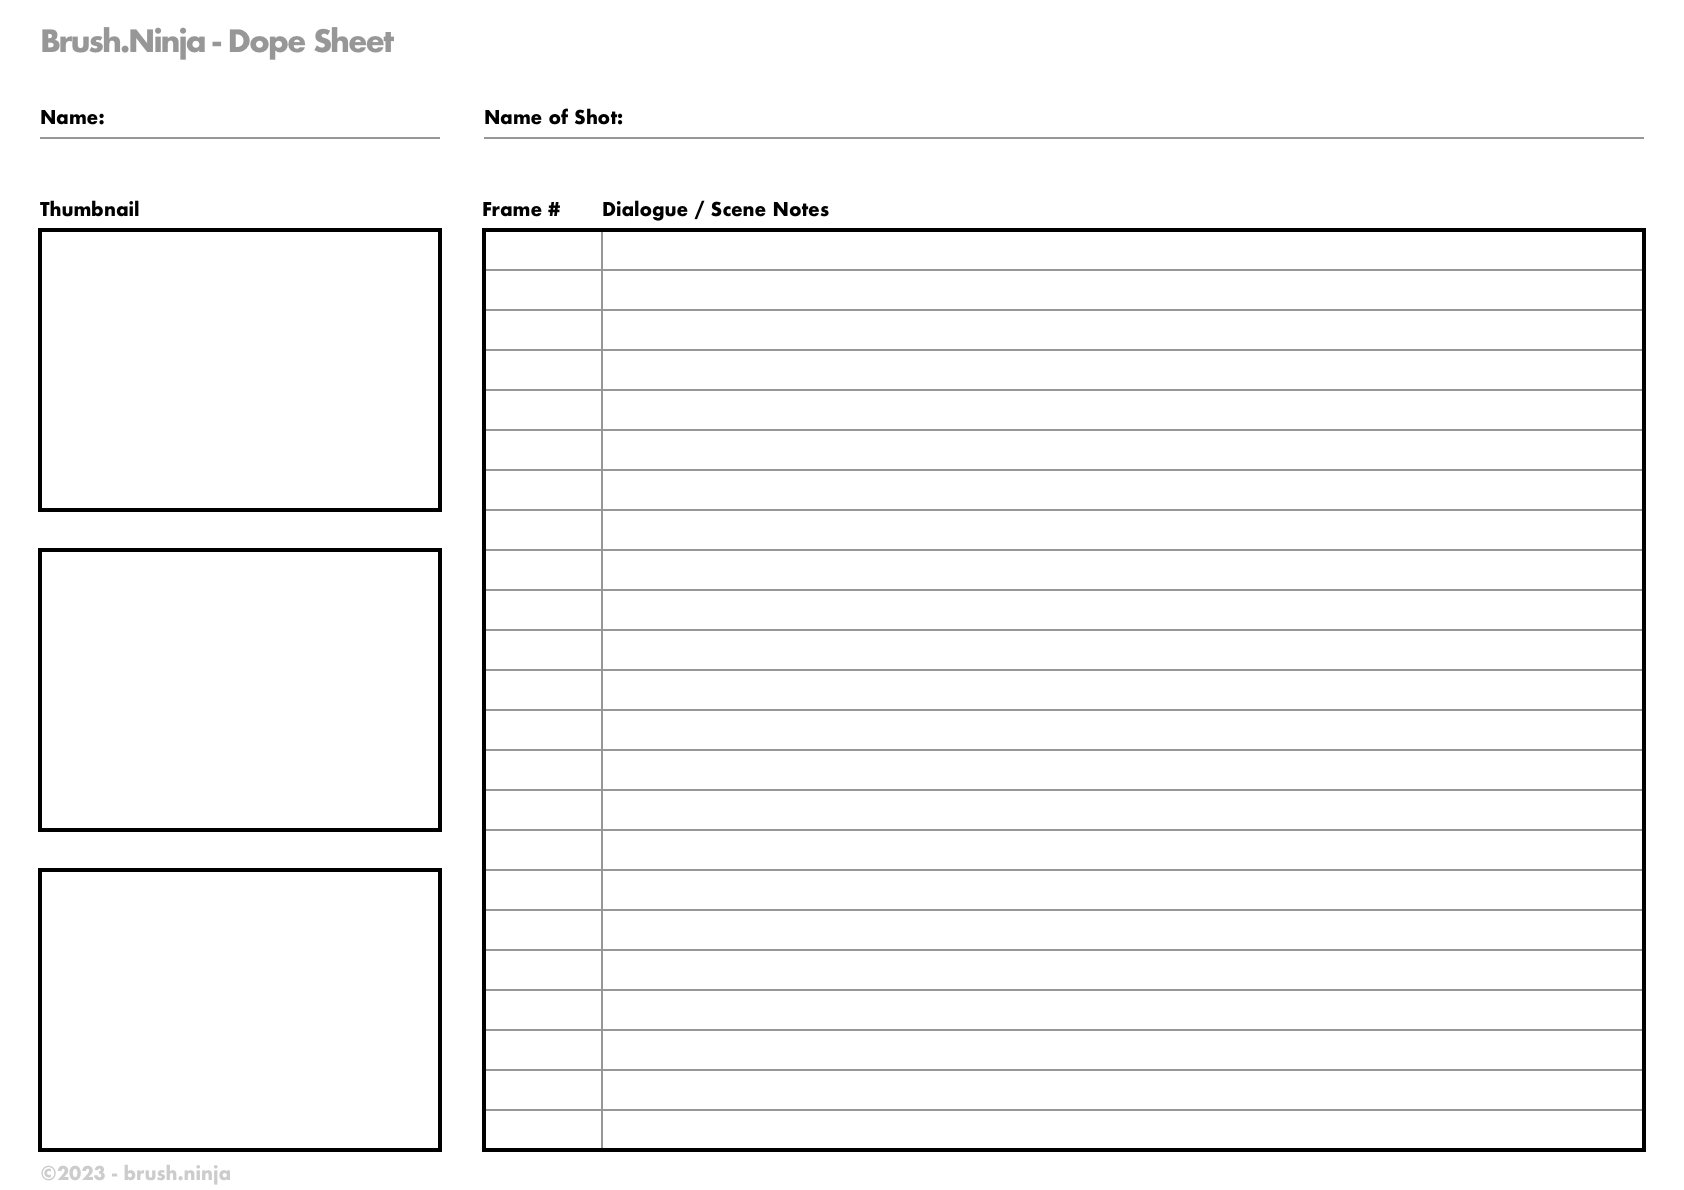 Example Dope Sheet layout